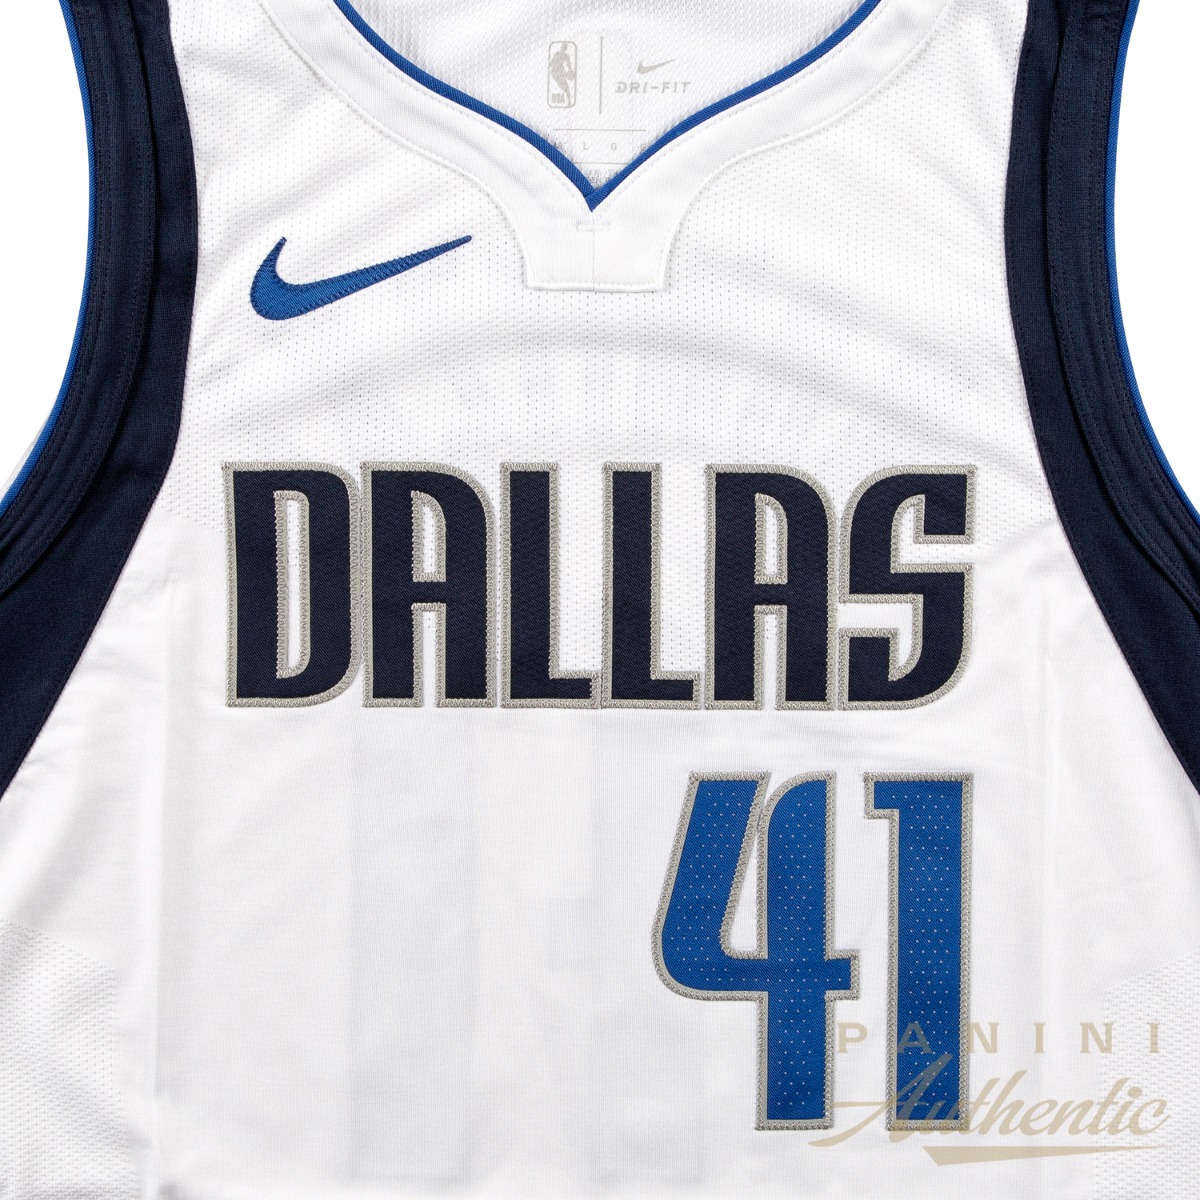 Dirk Nowitzki Dallas Mavericks Autographed White Nike Swingman Jersey